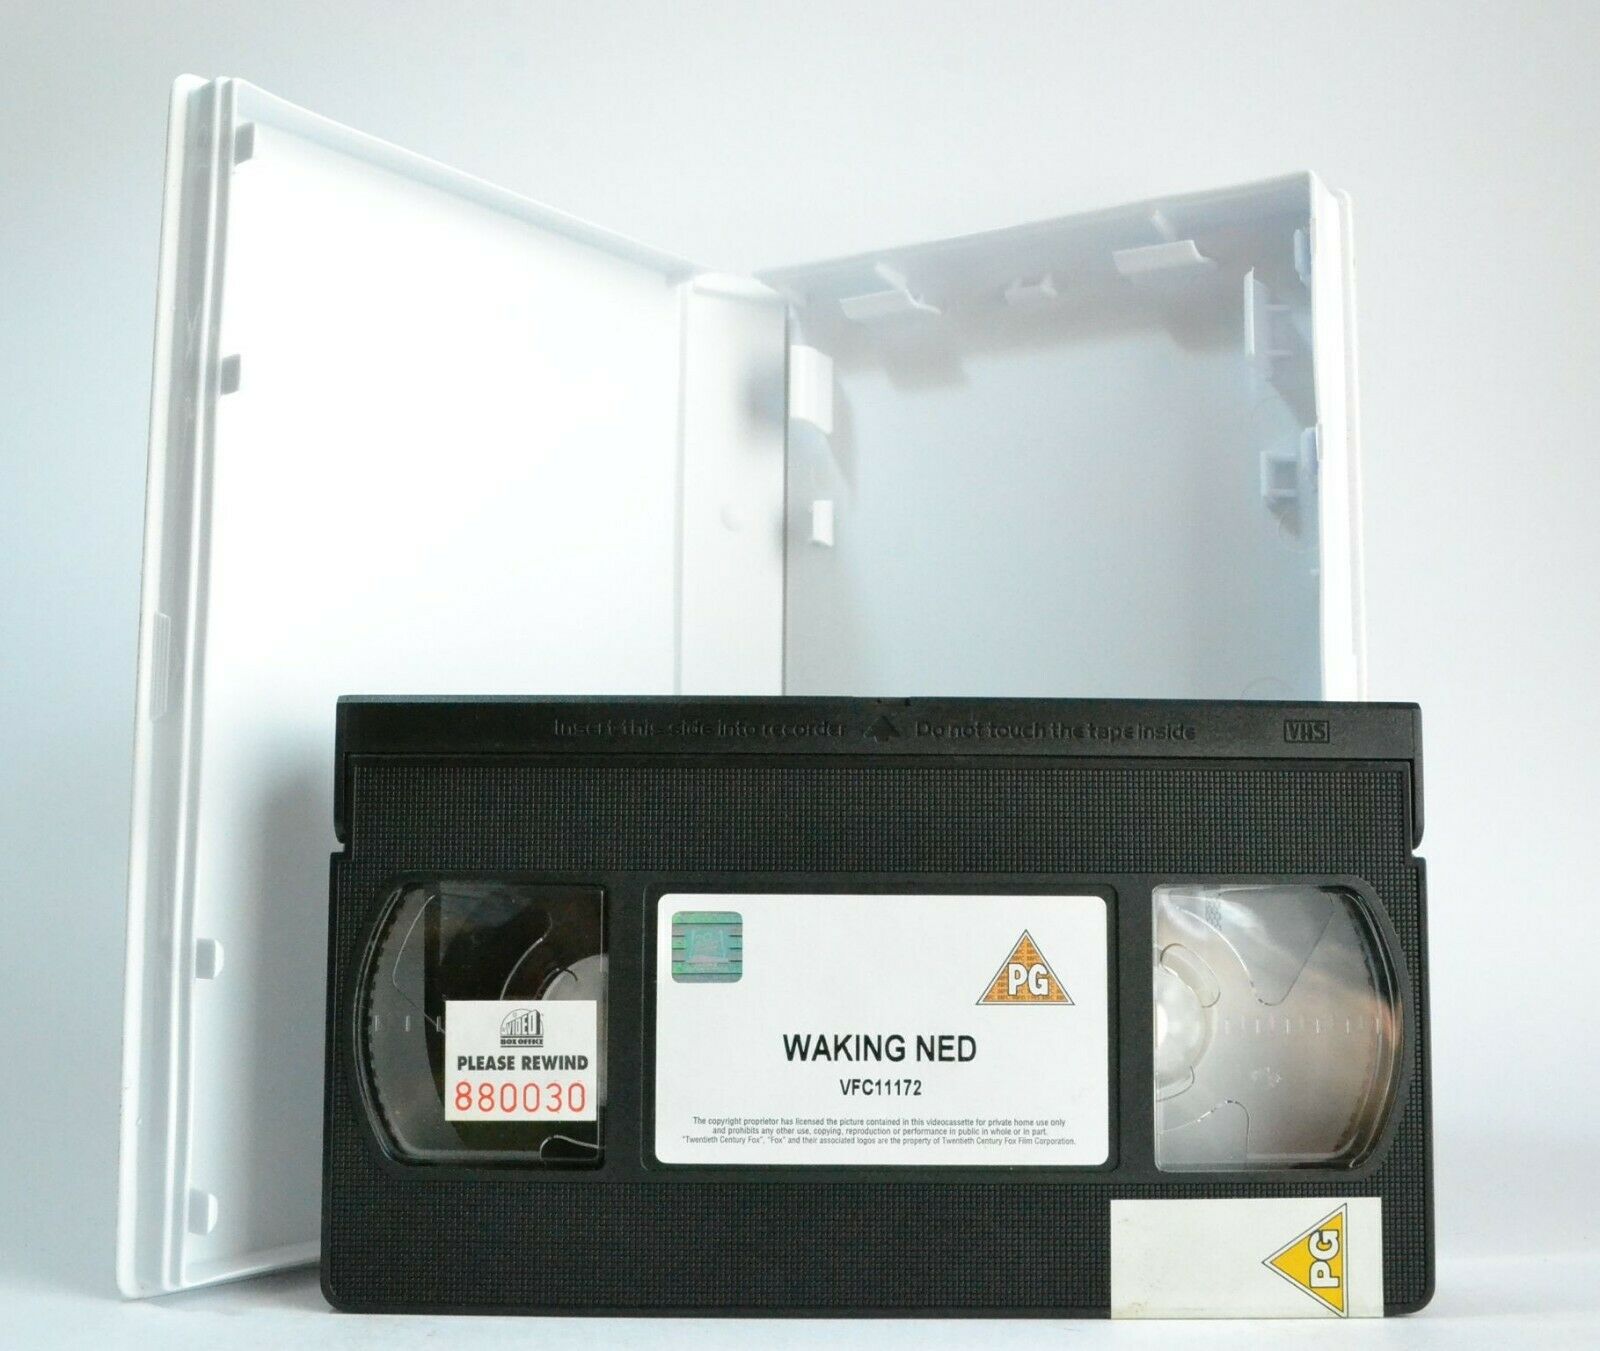 Waking Ned (1998) - British Comedy - Large Box - Ian Bannen/David Kelly - VHS-